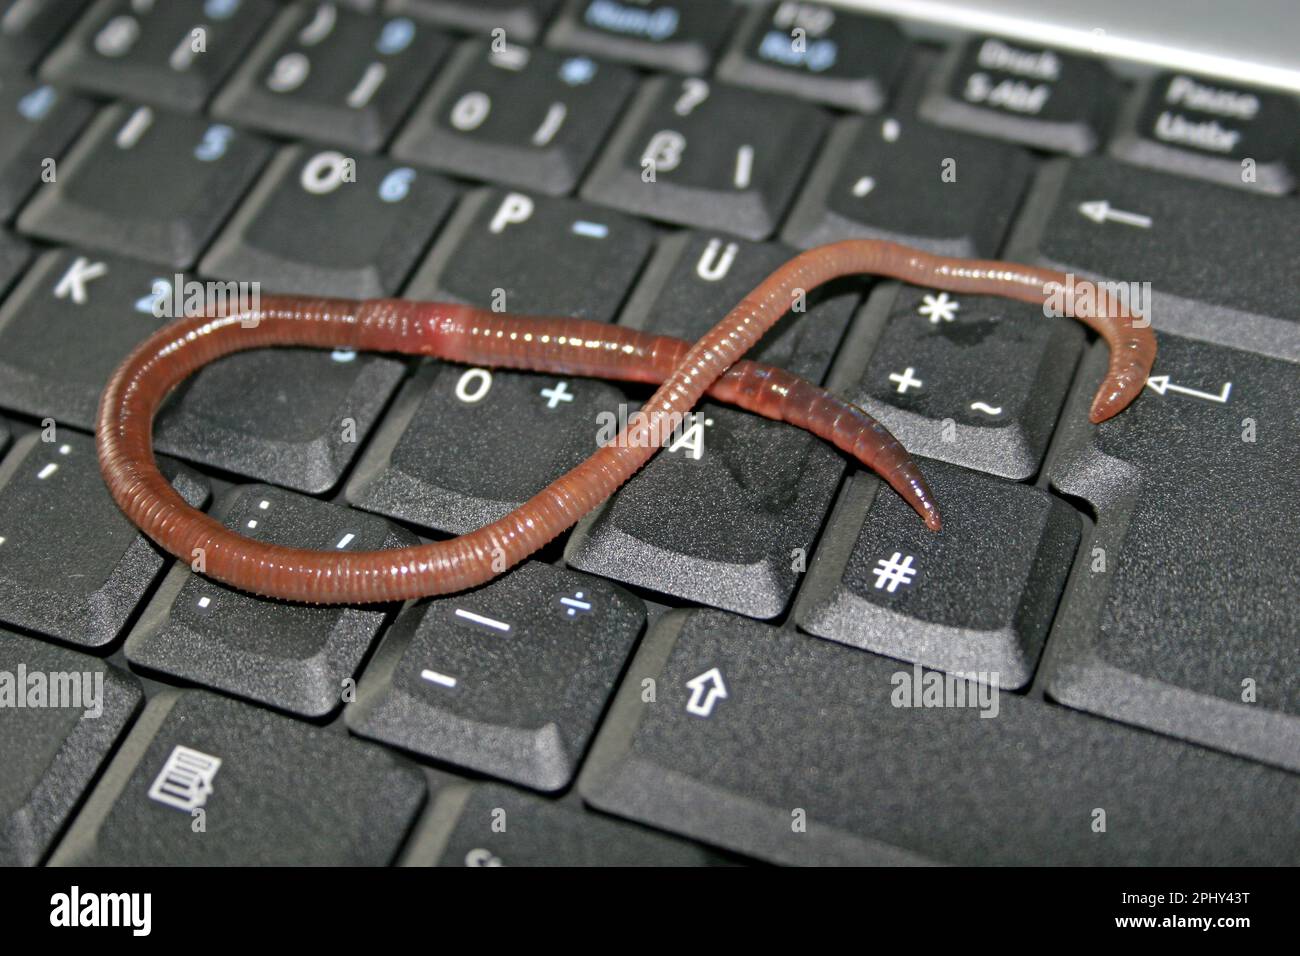 Computer worm Stock Photo